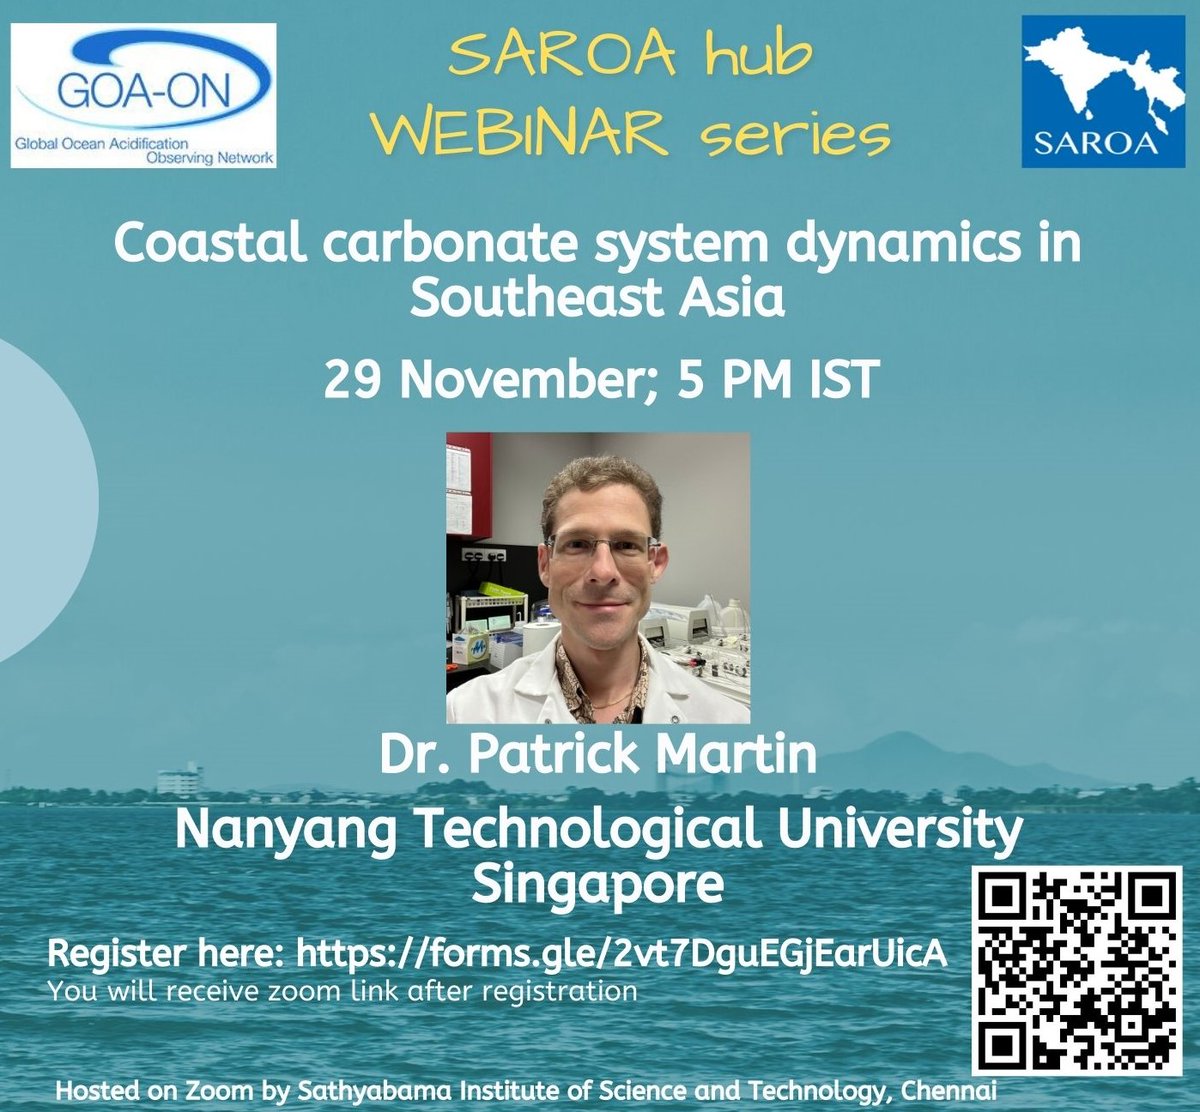 Register here: forms.gle/2vt7DguEGjEarU… to listen Dr. Patrick Martin on Coastal Carbonate system in Southeast Asia 
@SAROA_Hub @goa_on @BhadPunyasloke @Anweghosh @Prakash_caridea #NTU #Oceanacidification #Climatechange #Webinar  #Carbonatechemistry #MarineEcology